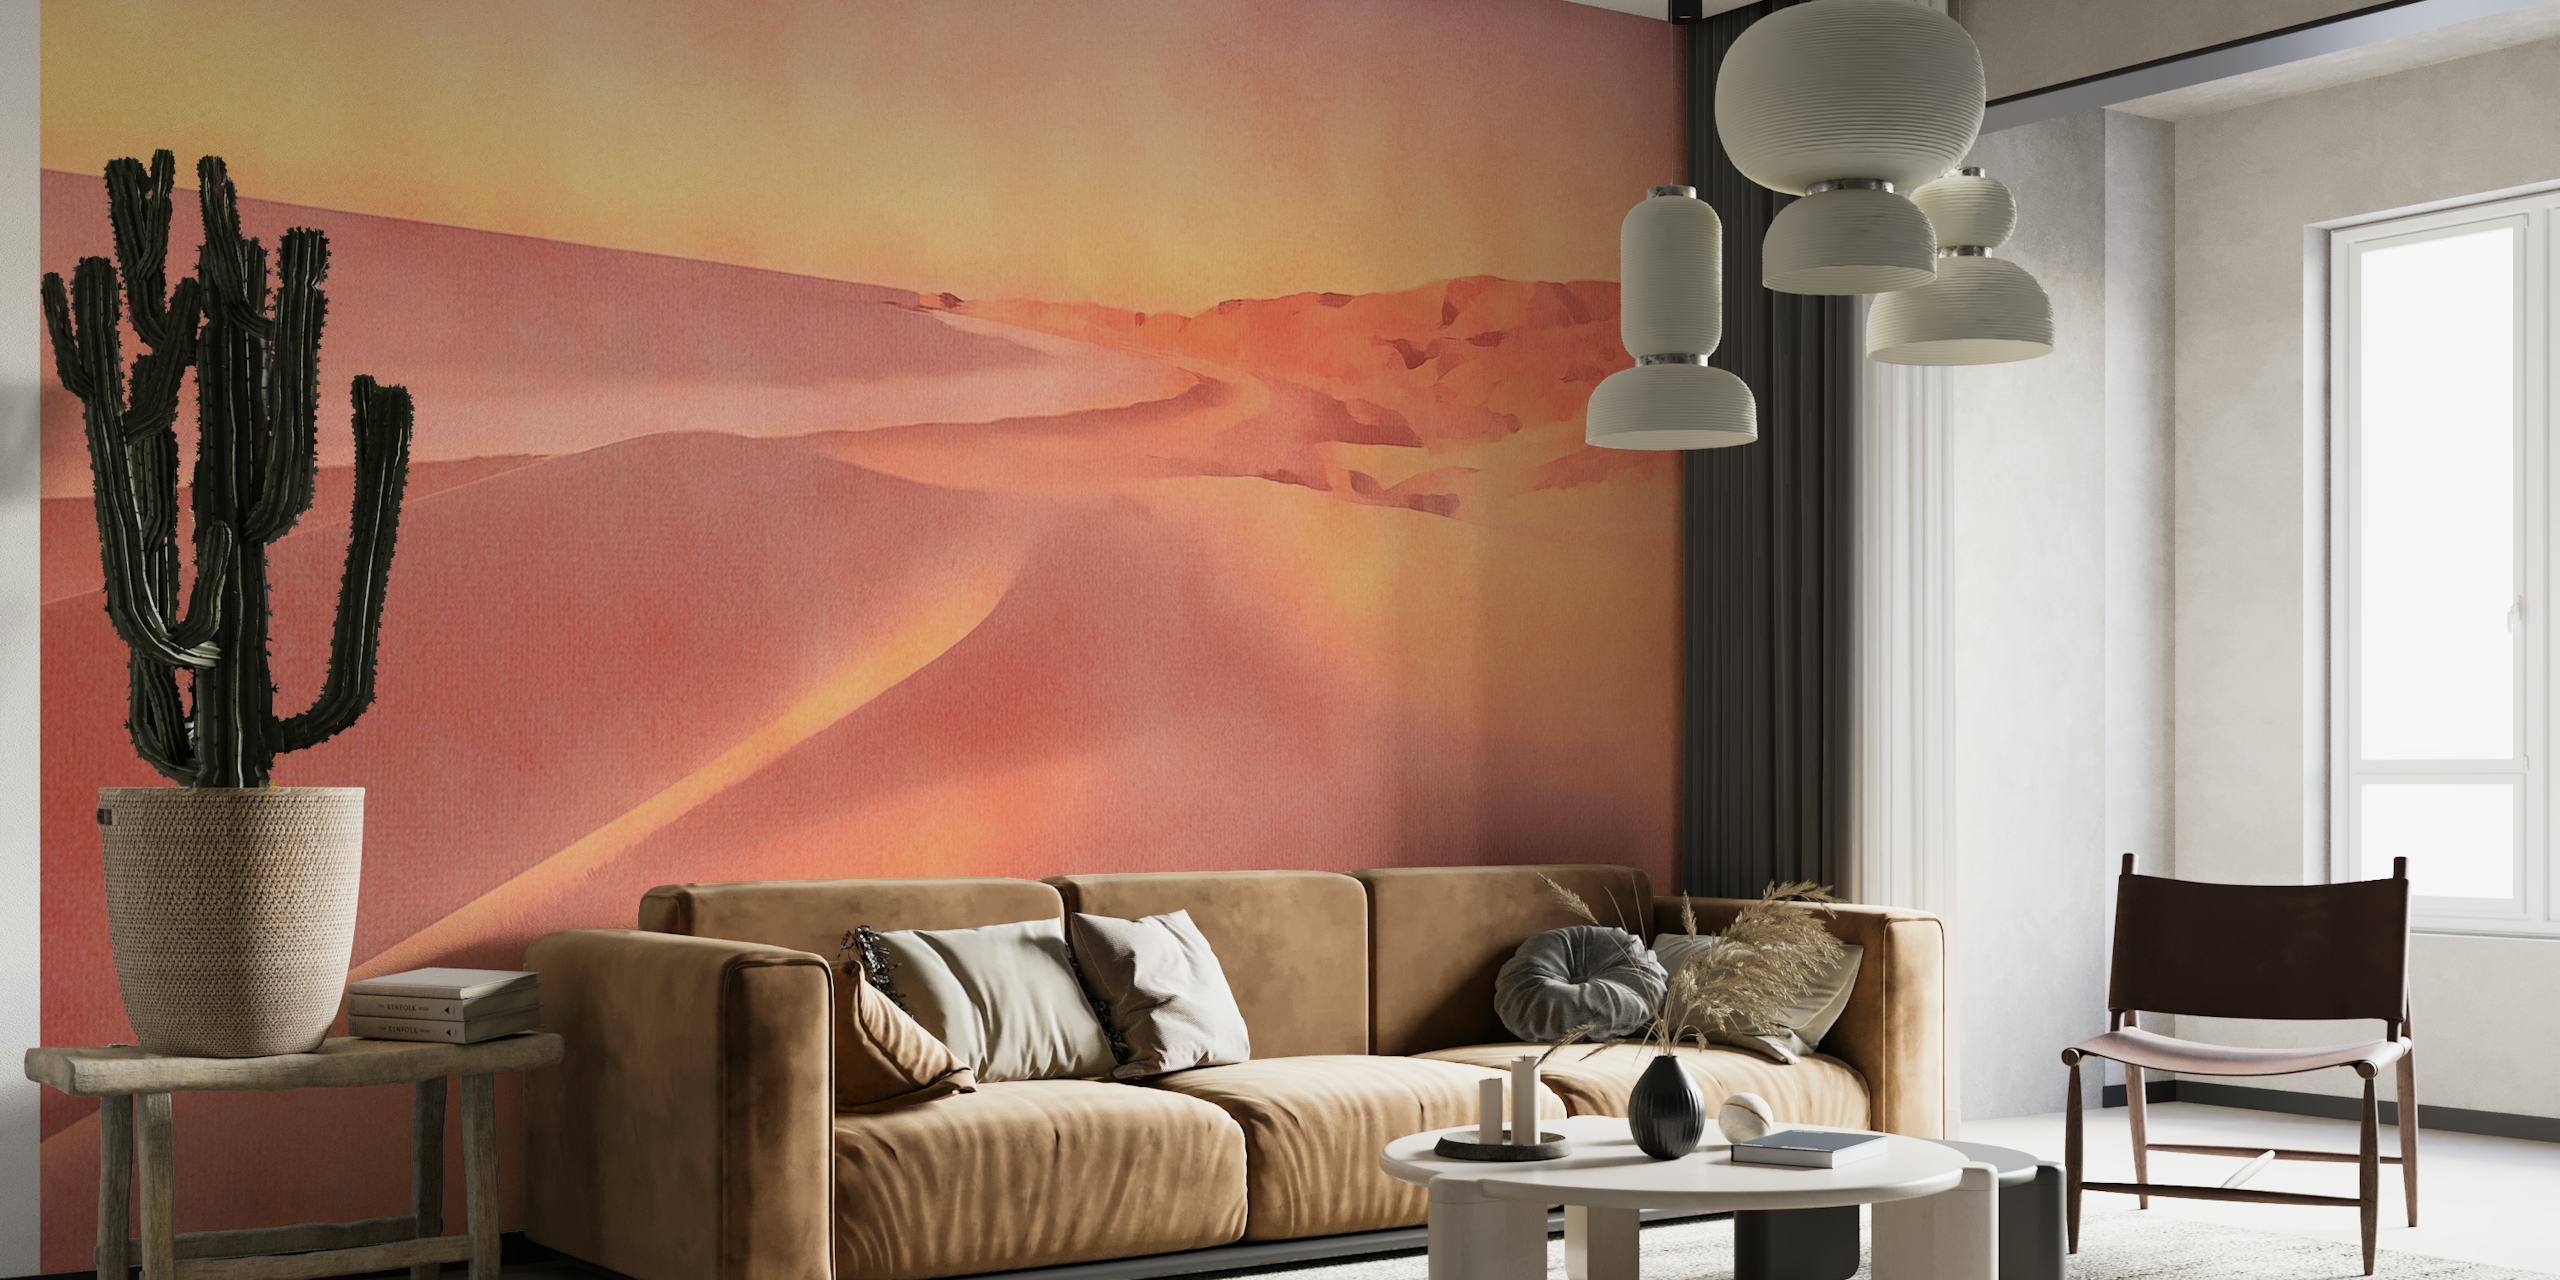 Nježno ružičaste i narančaste nijanse zidnog murala s mirnim pustinjskim krajolikom